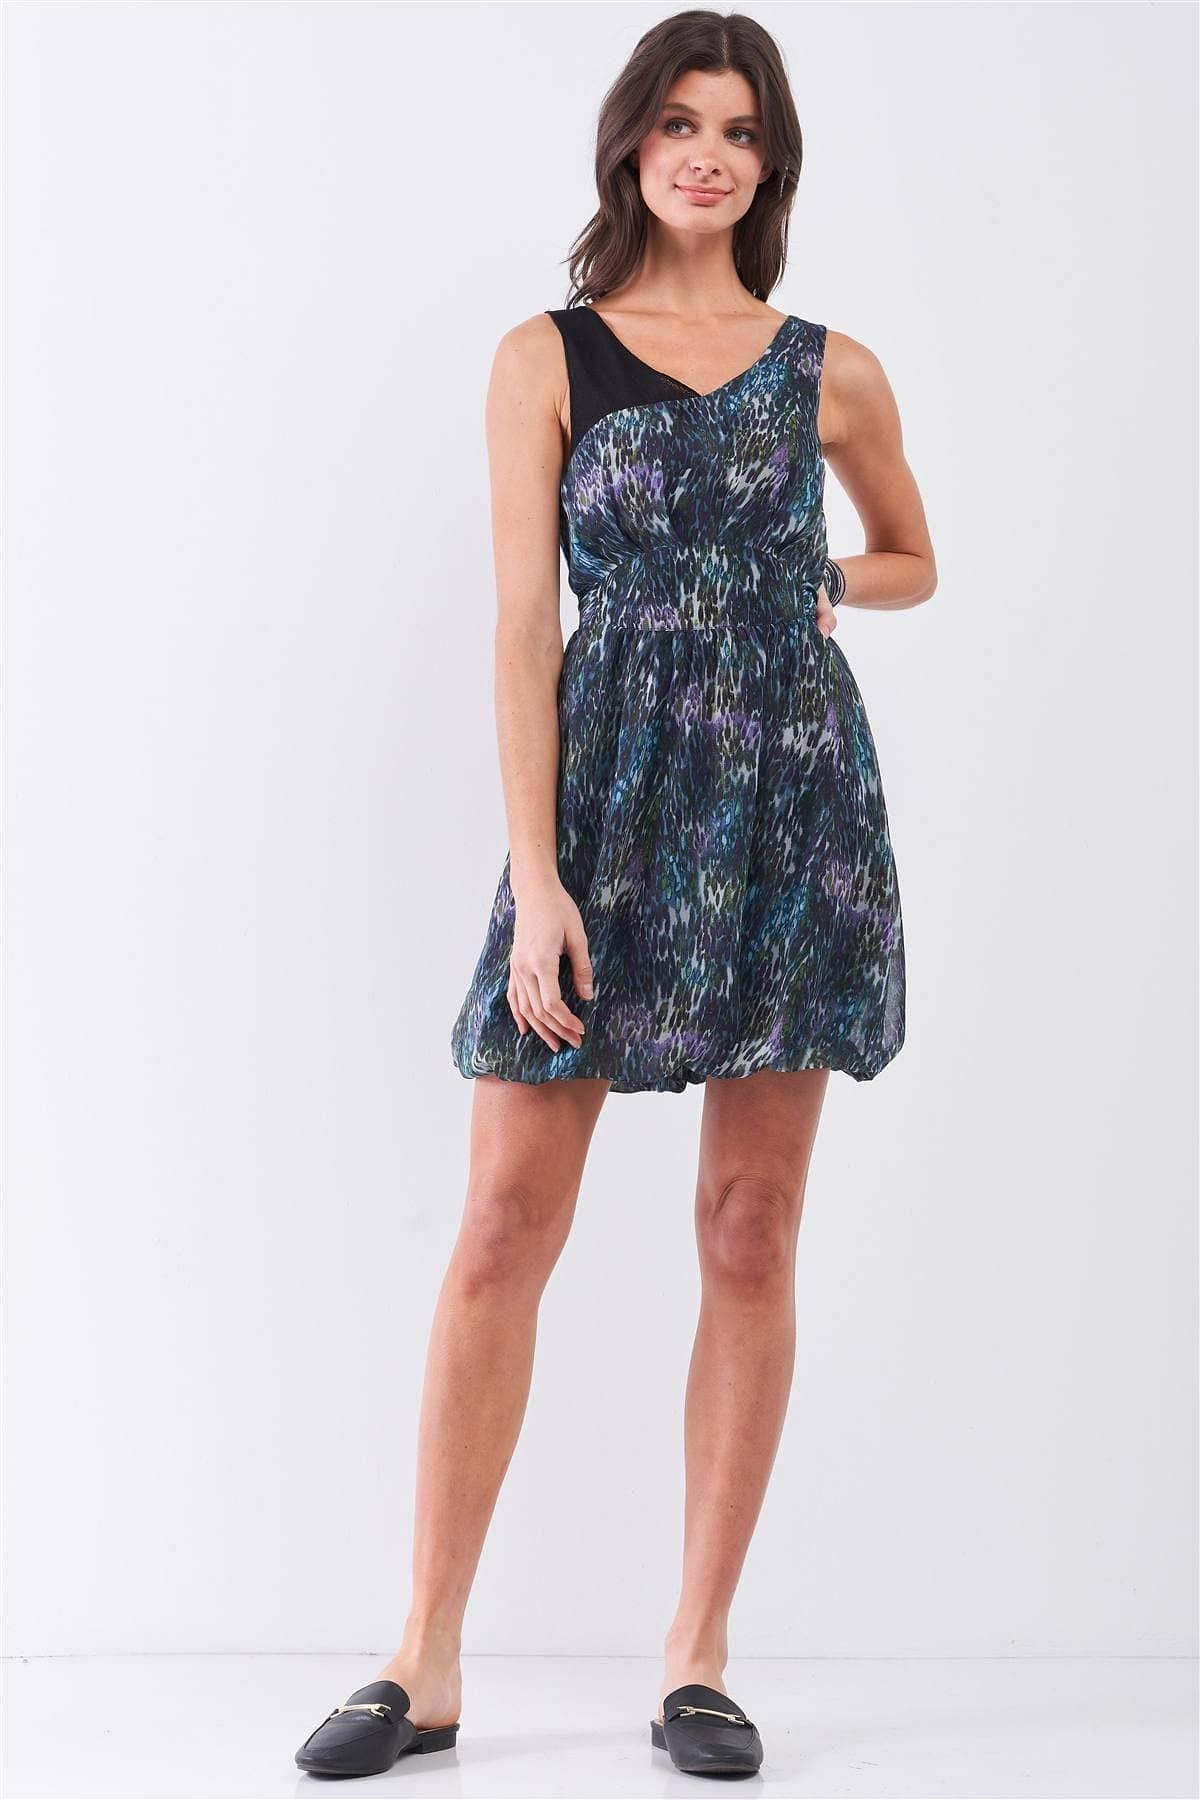 Tie Dye Sleeveless V-Neck Mini Dress - Shopping Therapy dress